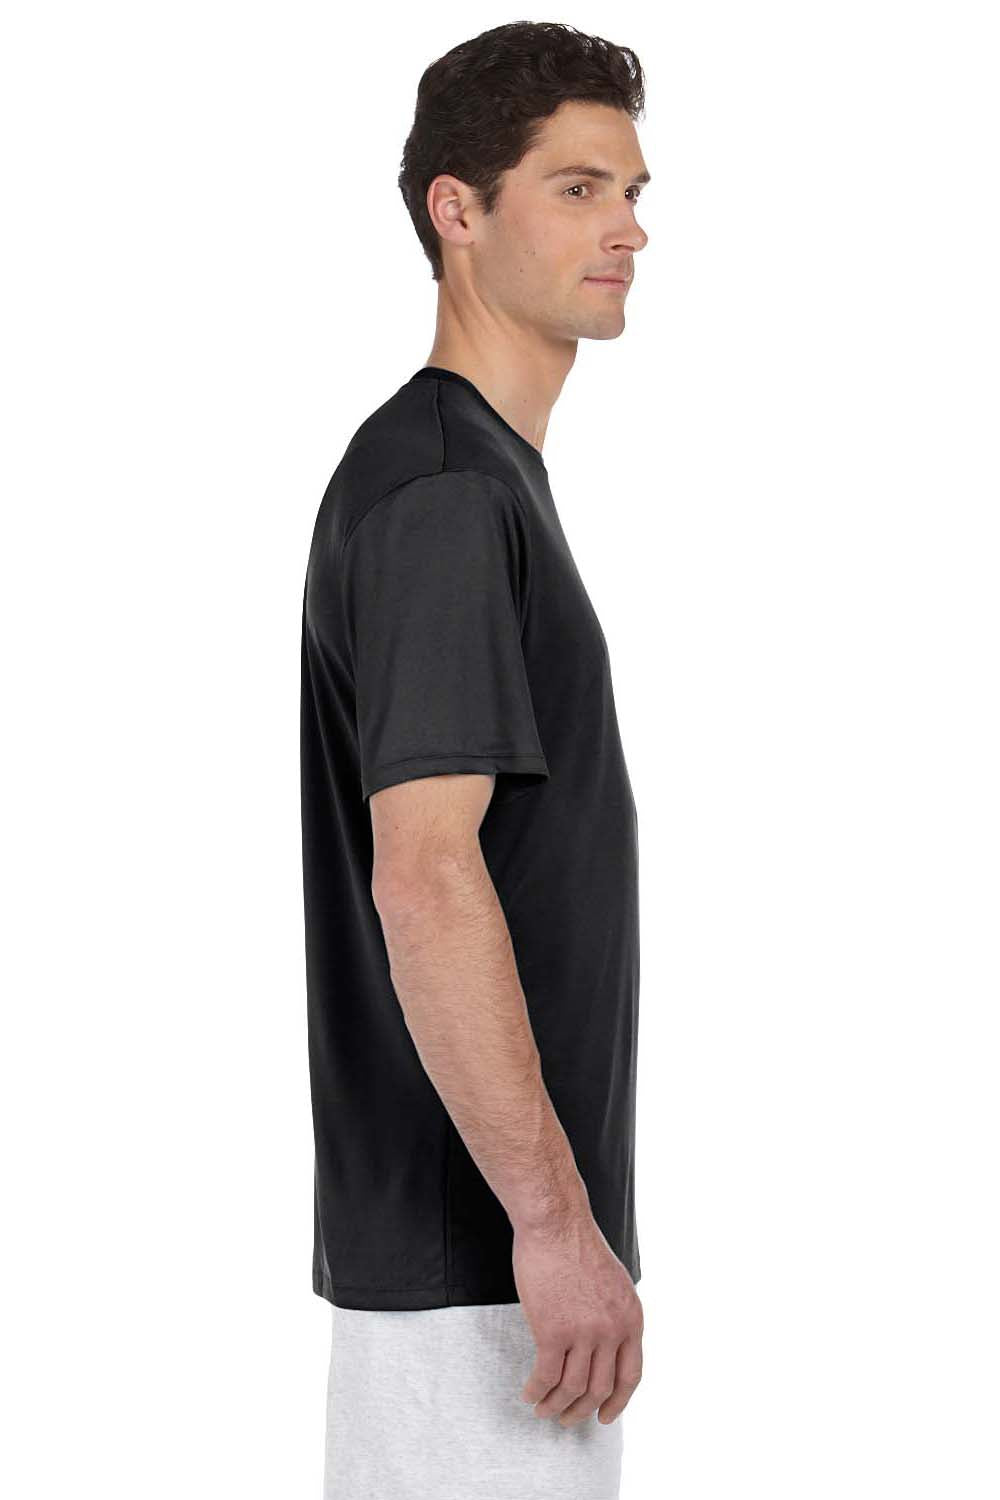 Hanes 4820 Mens Cool DRI FreshIQ Moisture Wicking Short Sleeve Crewneck T-Shirt Black Side